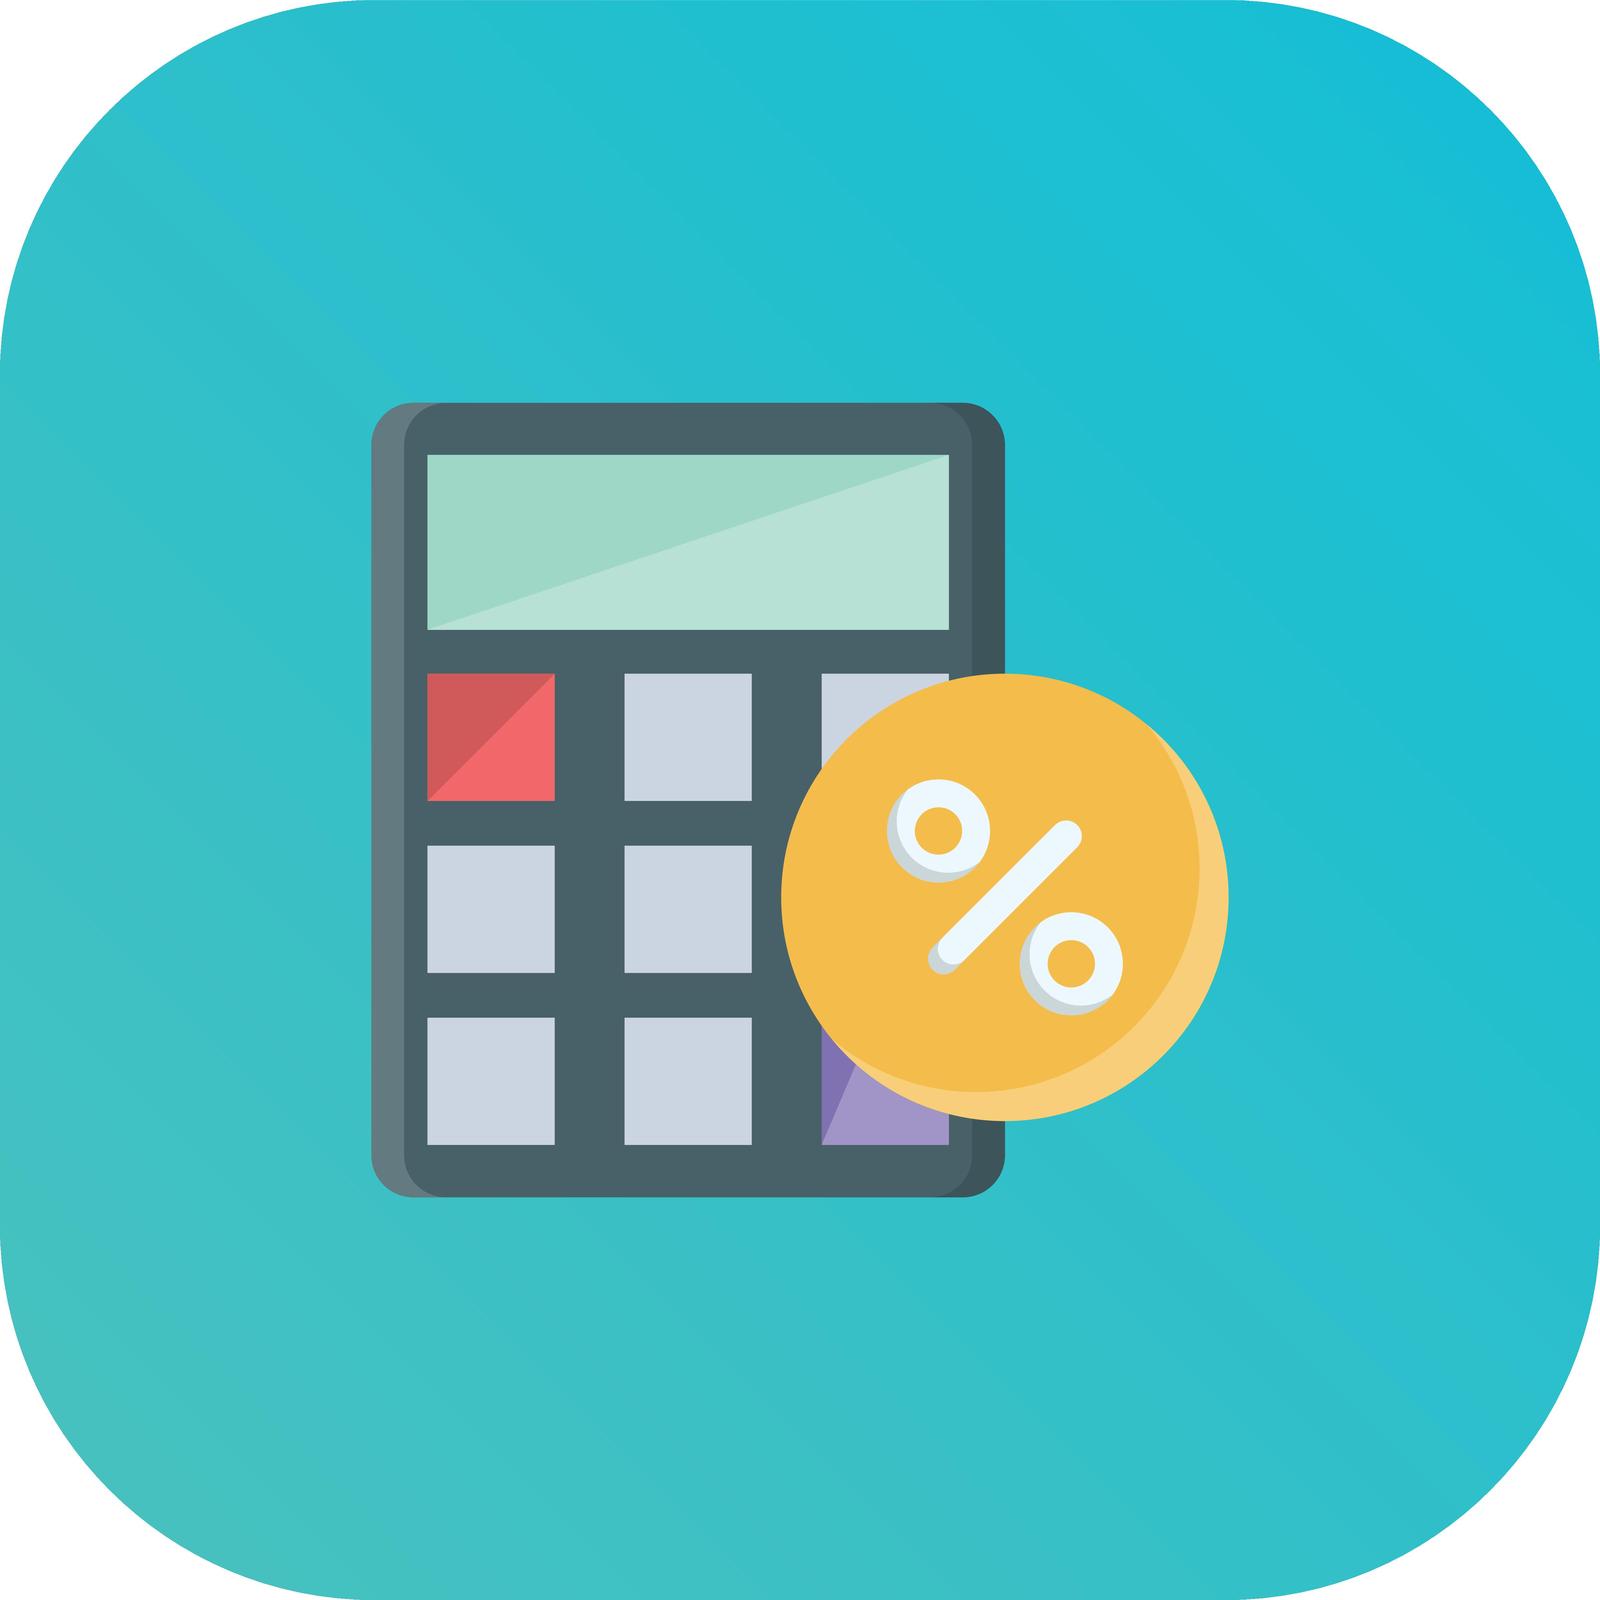 btc profit calculator trading